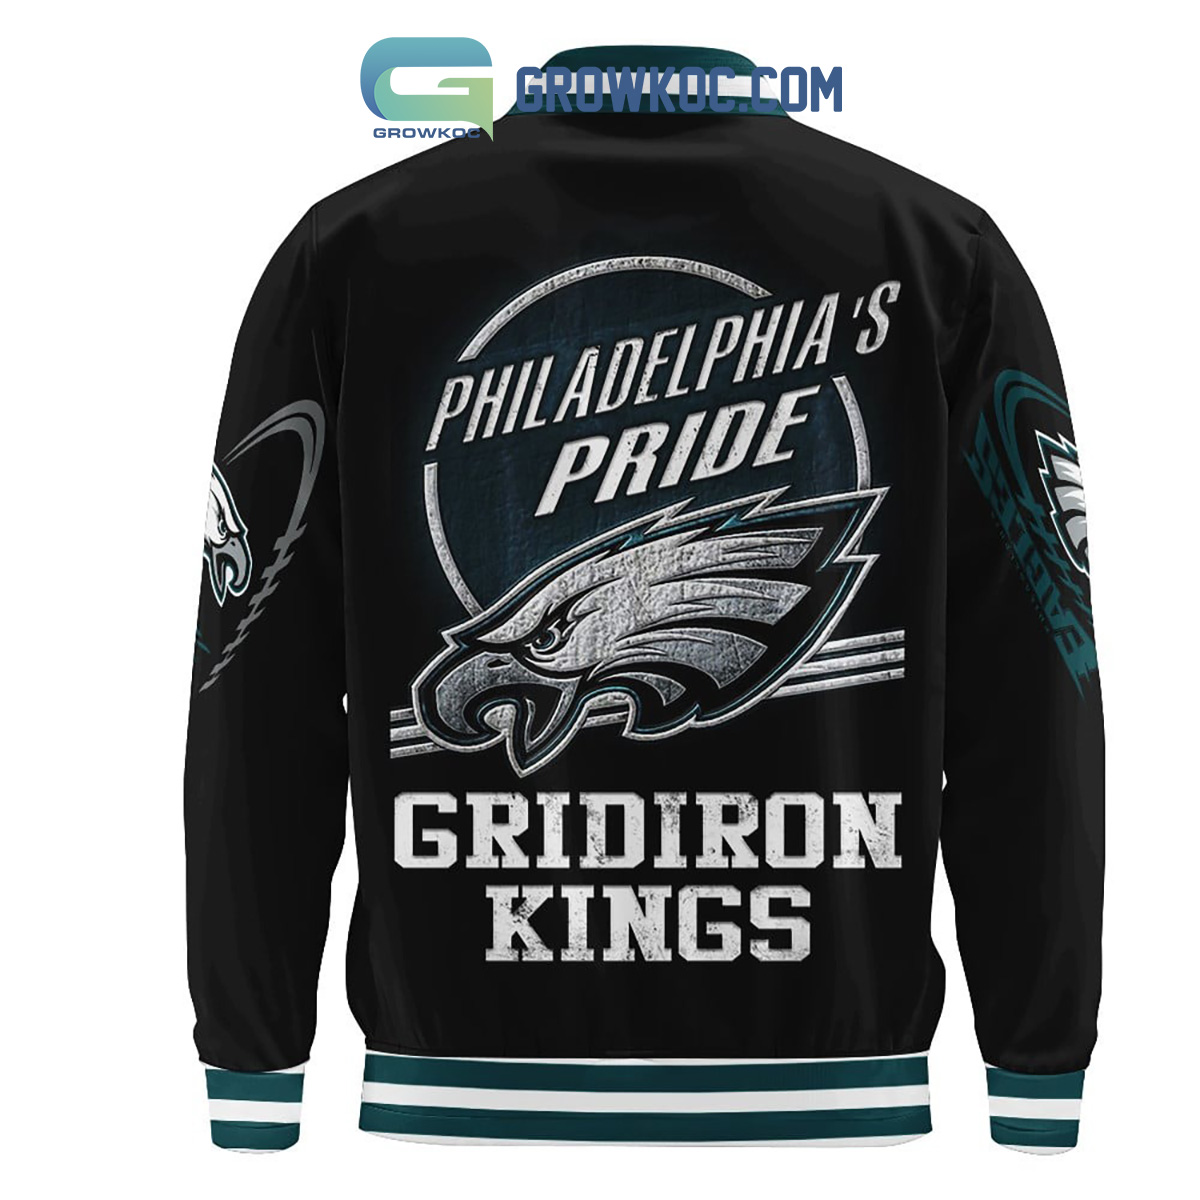 Philadelphia Eagles Philadelphia's Pride Gridiron Kings Baseball